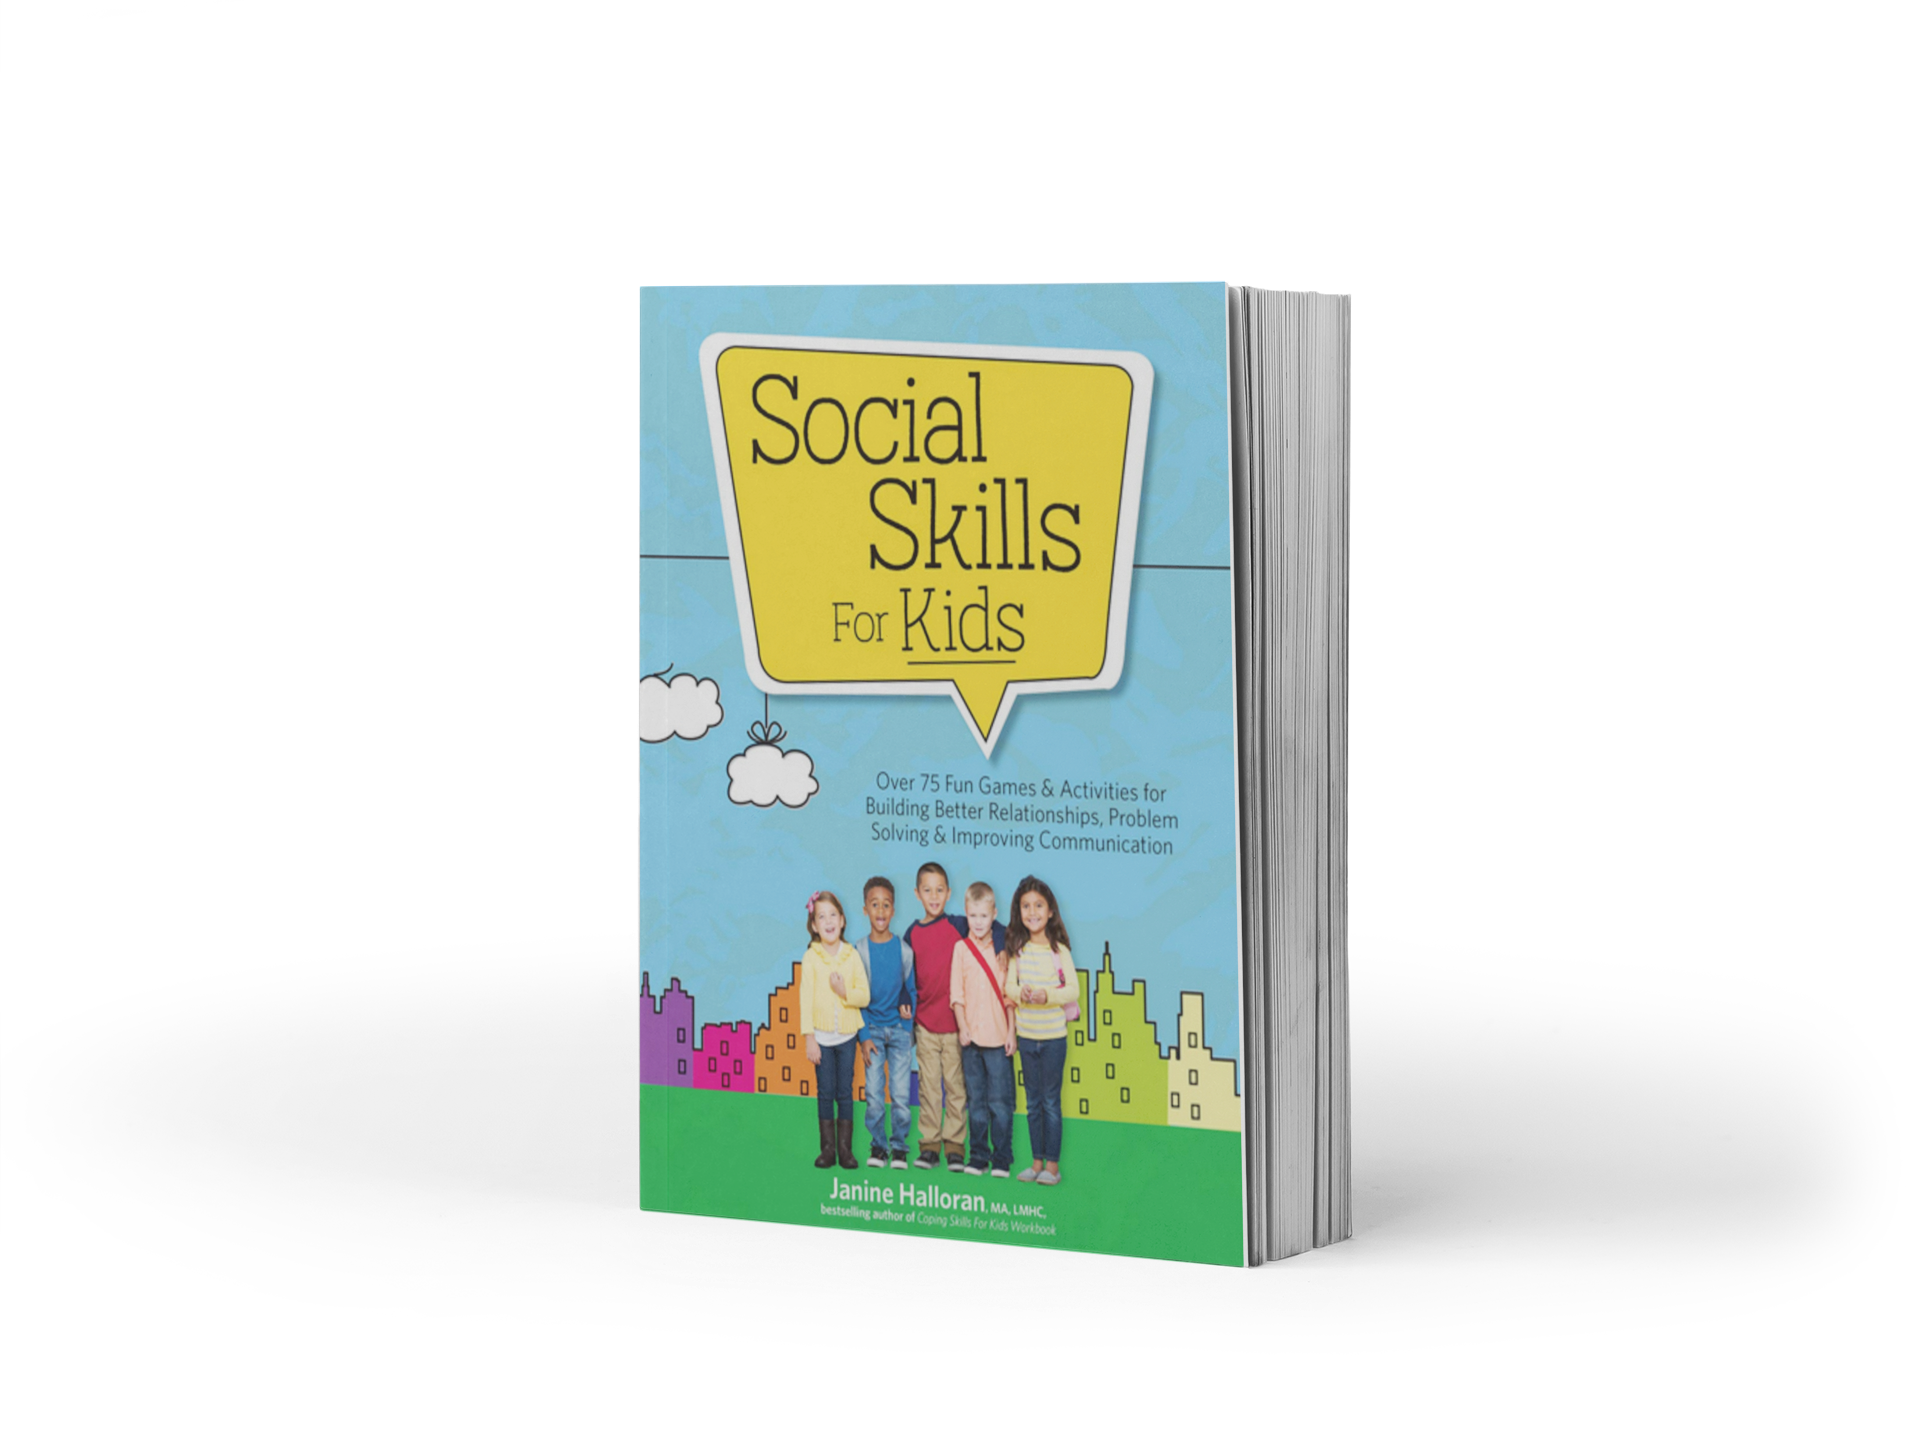 Play and Social Skills — Encourage Play